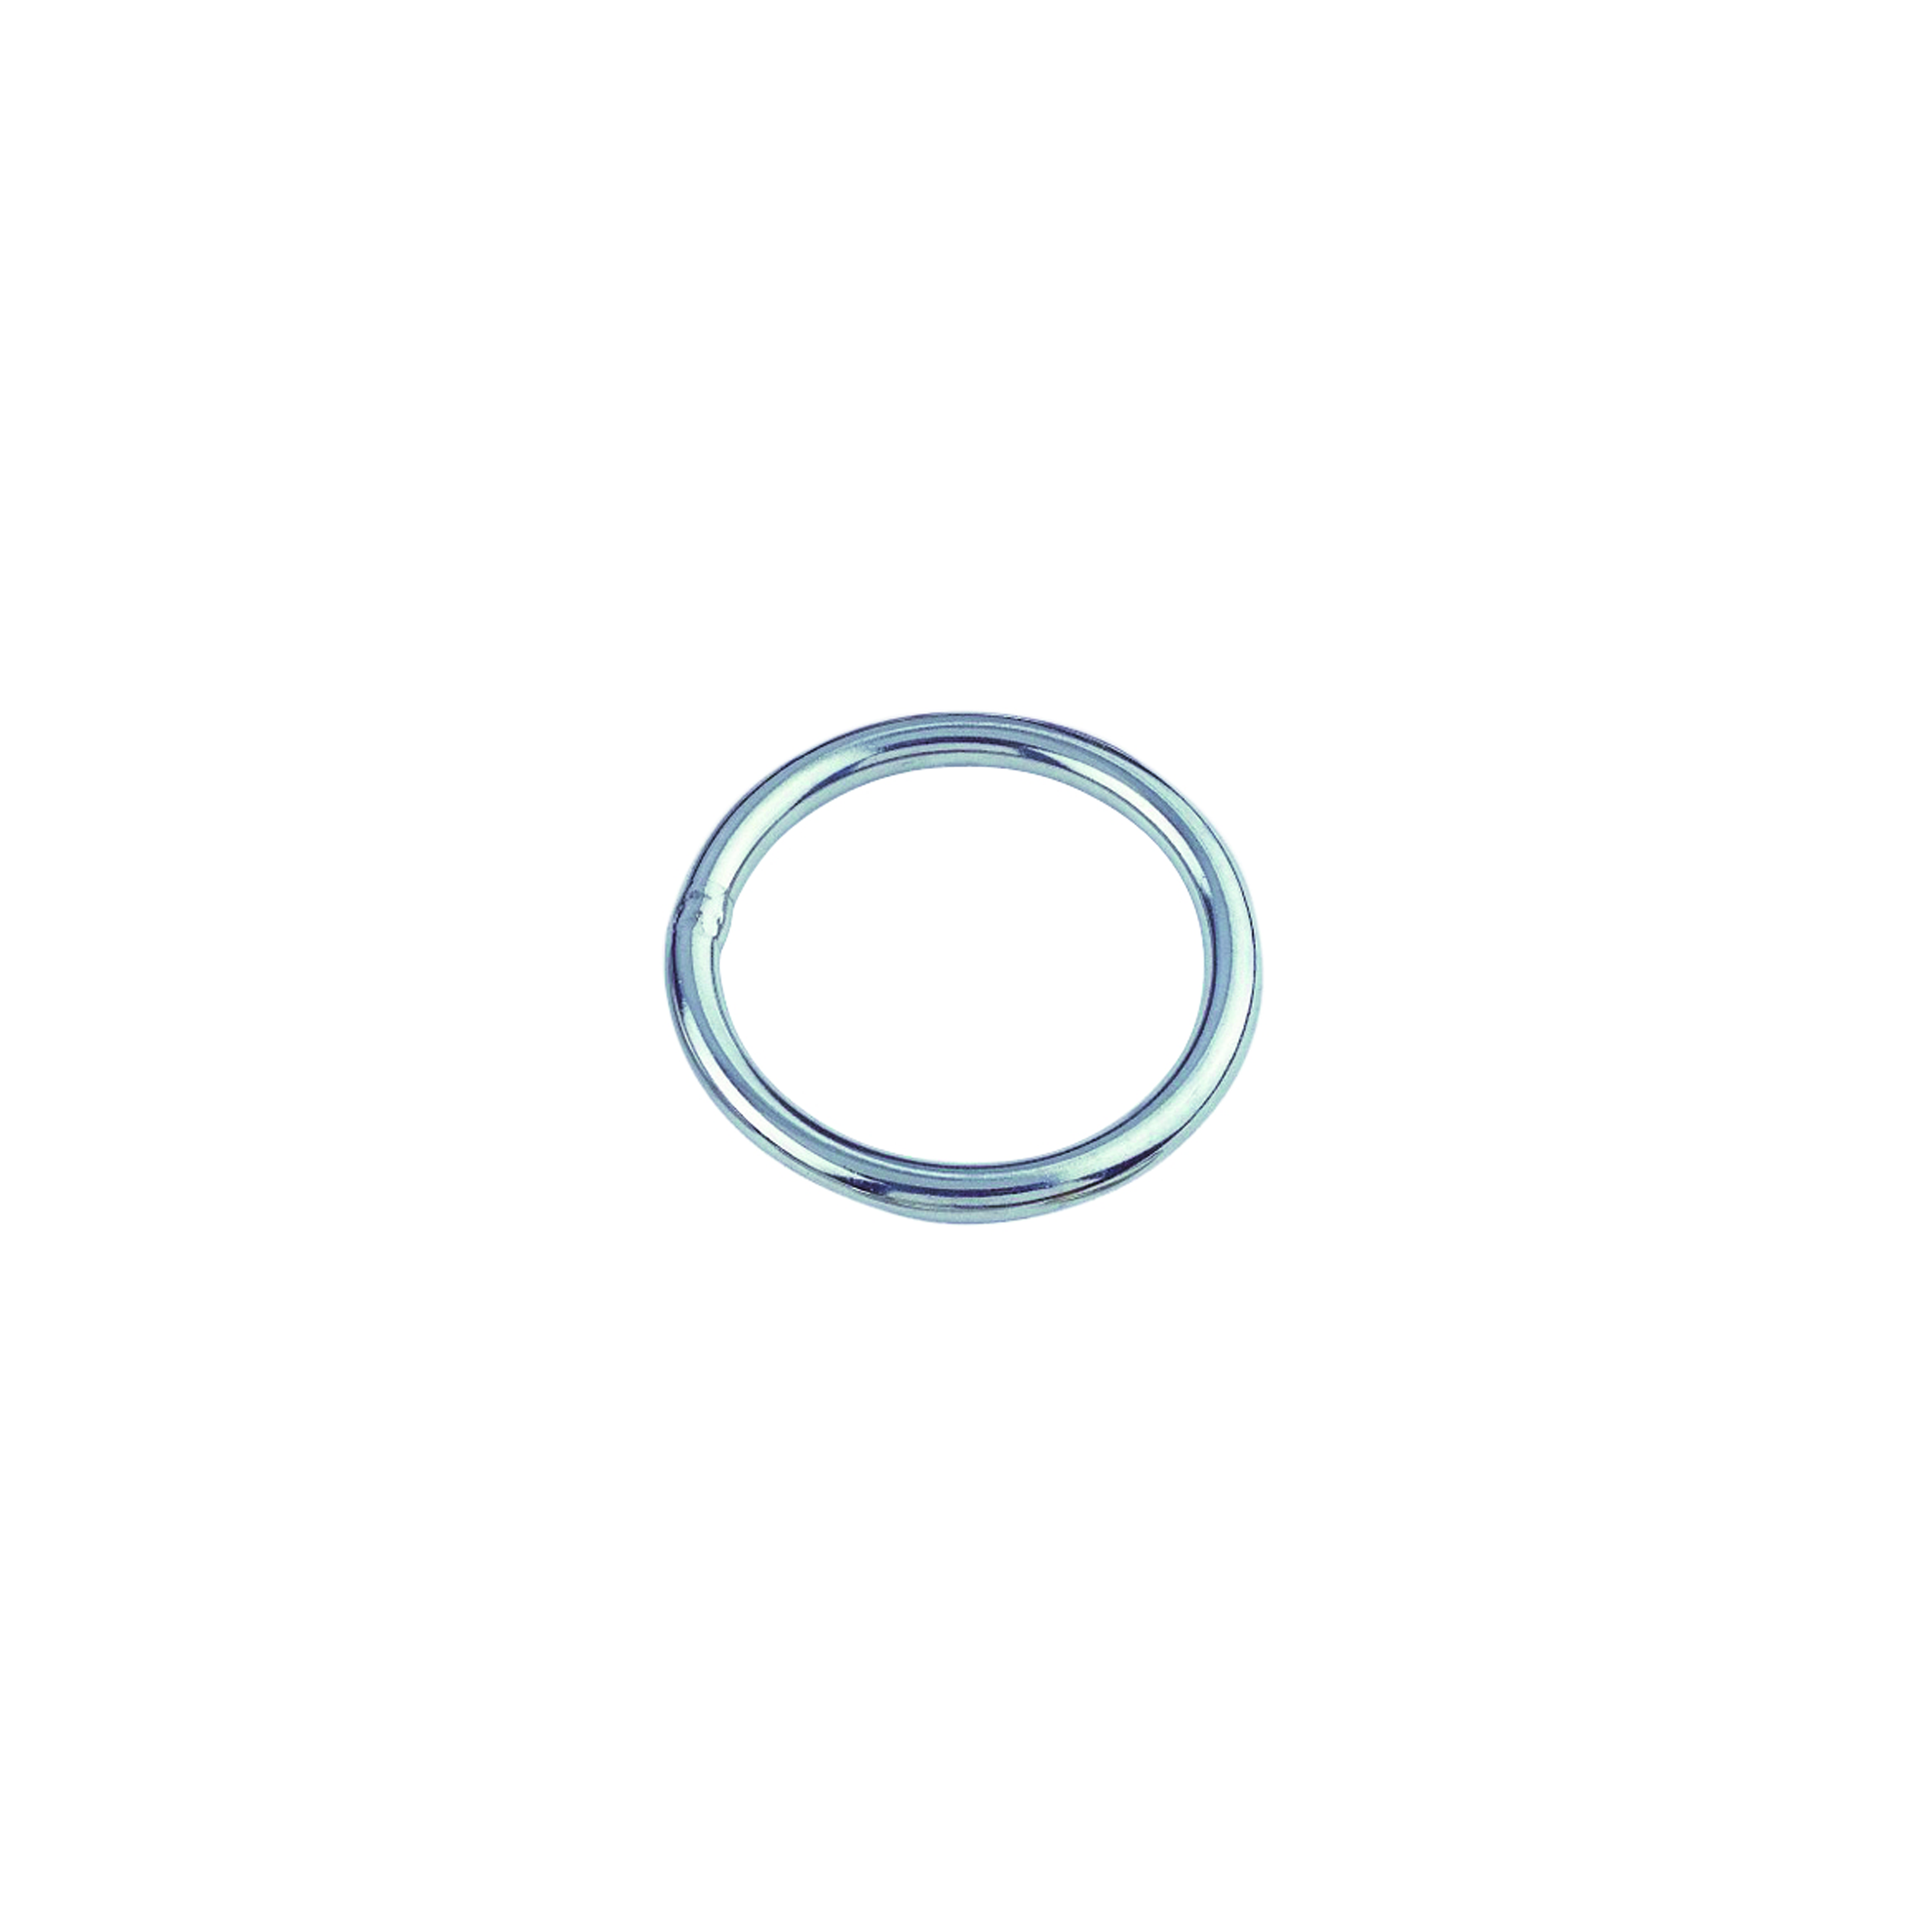 10 STCK / PCS. Ring, round A4  8x50mm